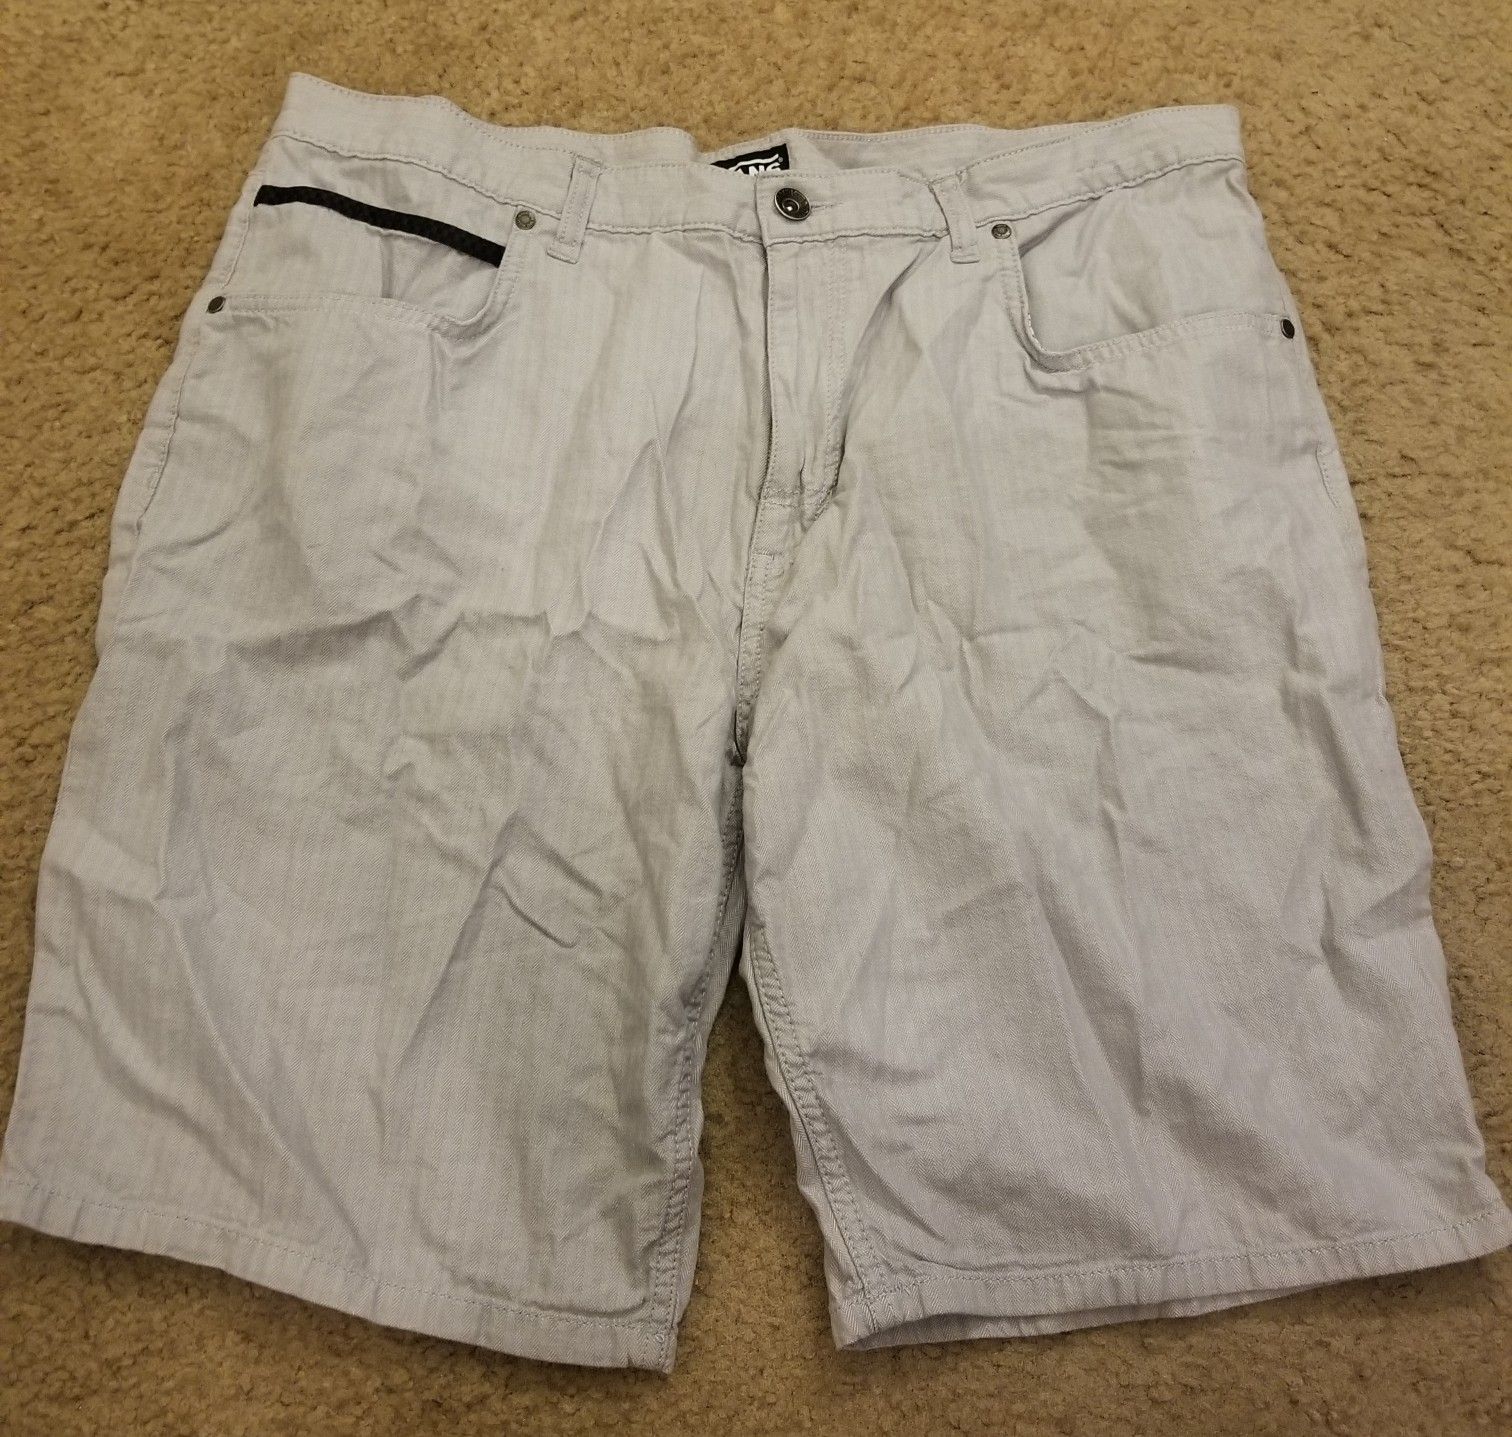 Guys shorts